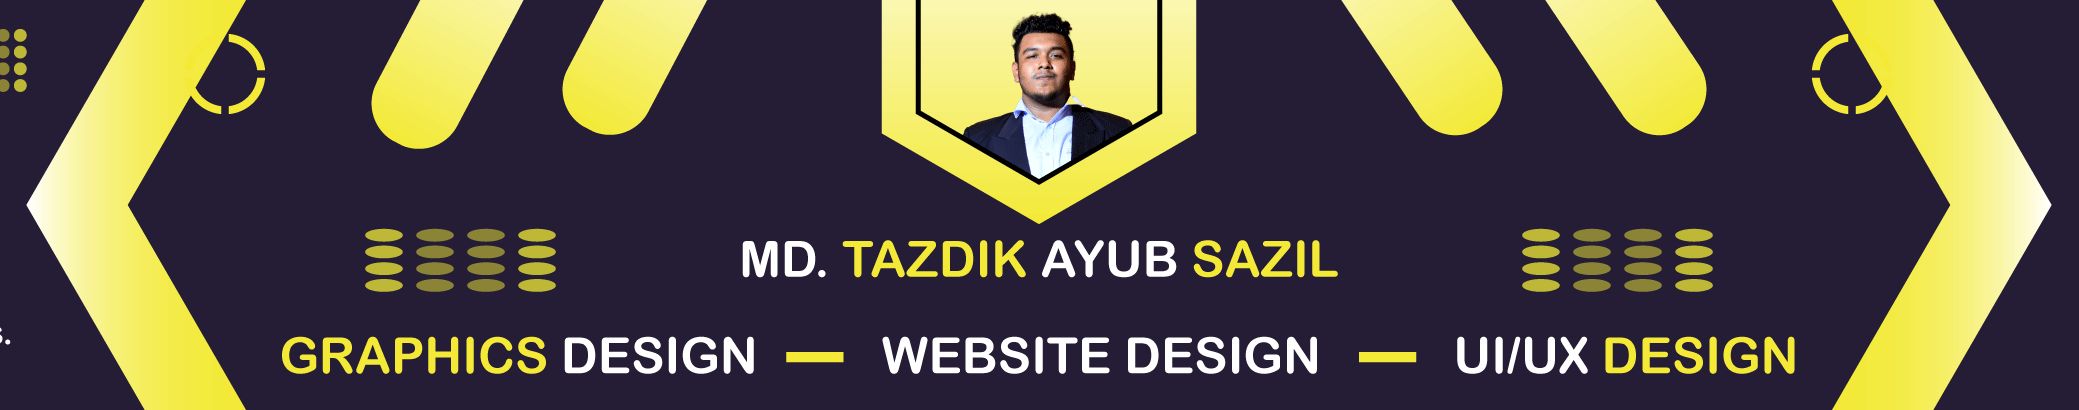 Banner de perfil de Tazdik Ayub Sazil